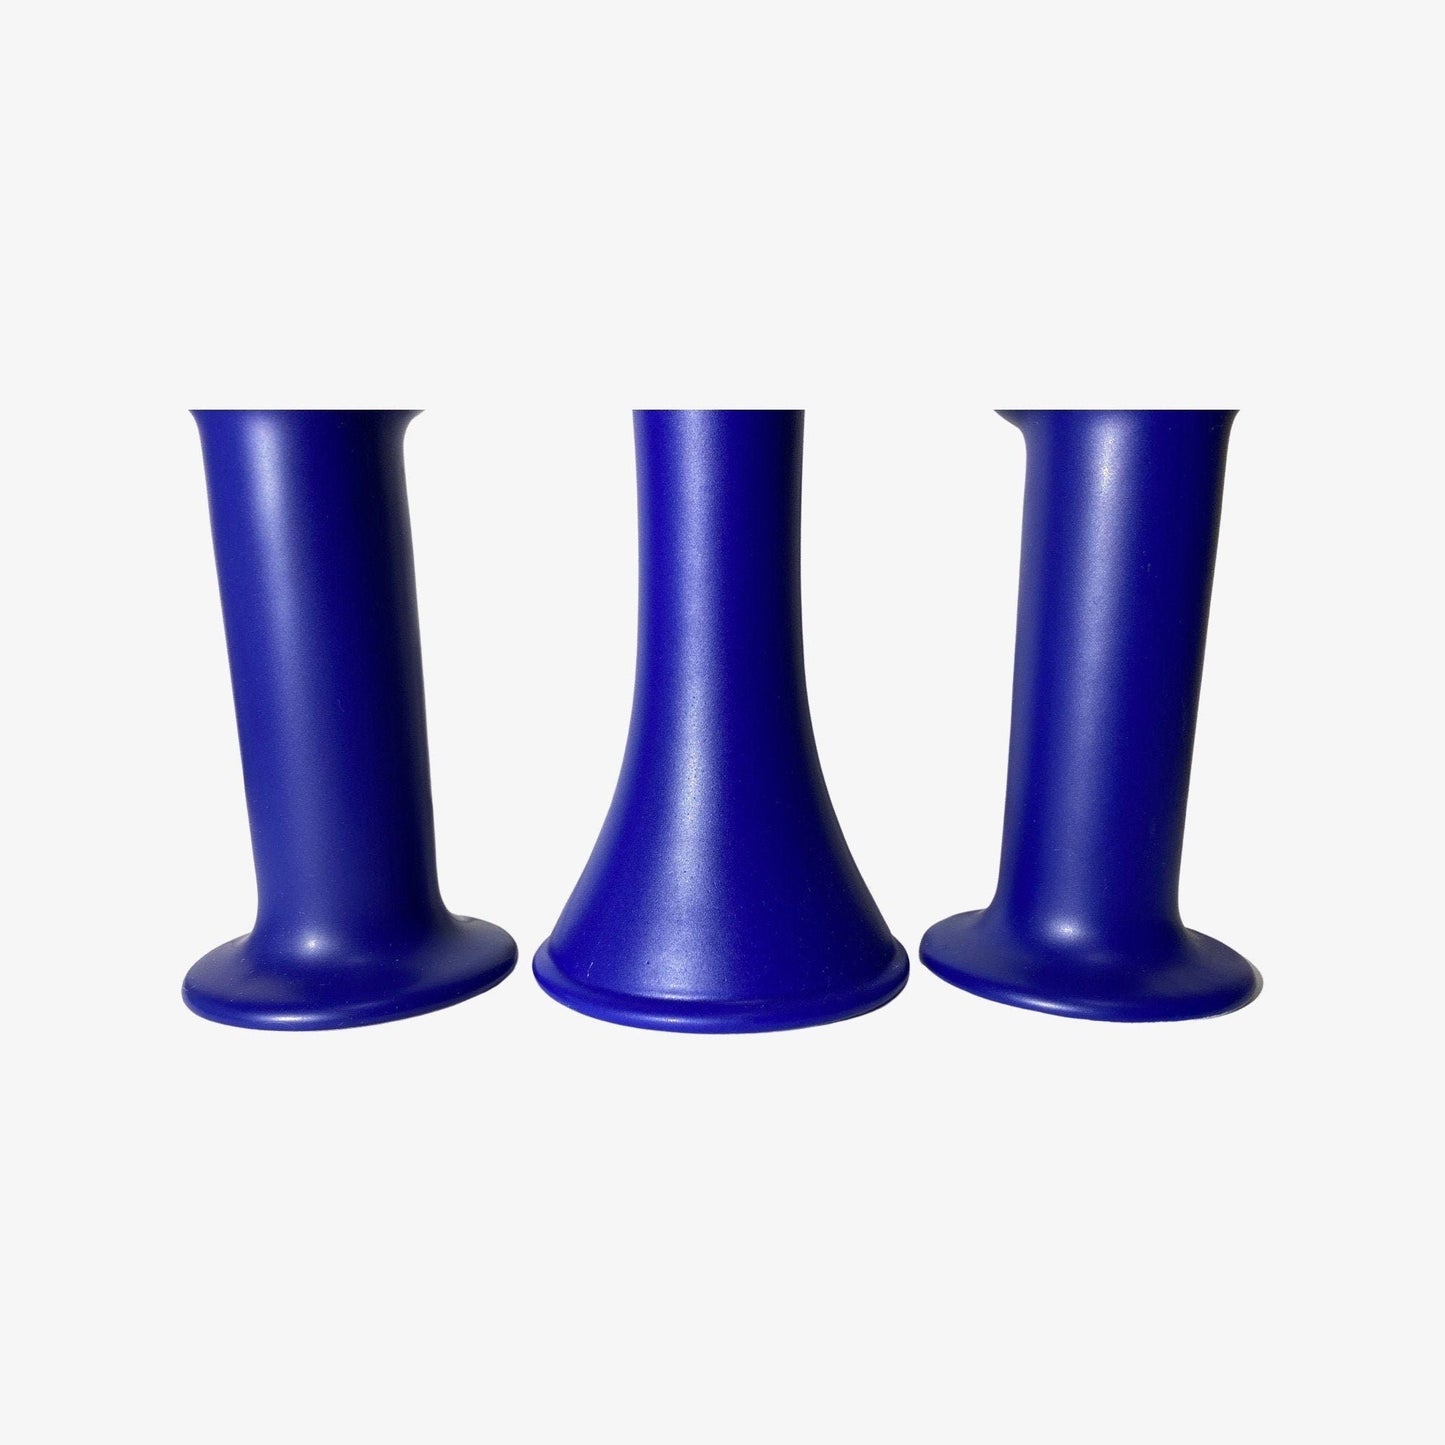 3 Vintage Candlestick Holders - Set of 3 Ceramic Candle Holders BLUE Colored | Mid-Century Design by ODENSE Denmark 1960s | Deep Blue Color - FancyVintage.nl -